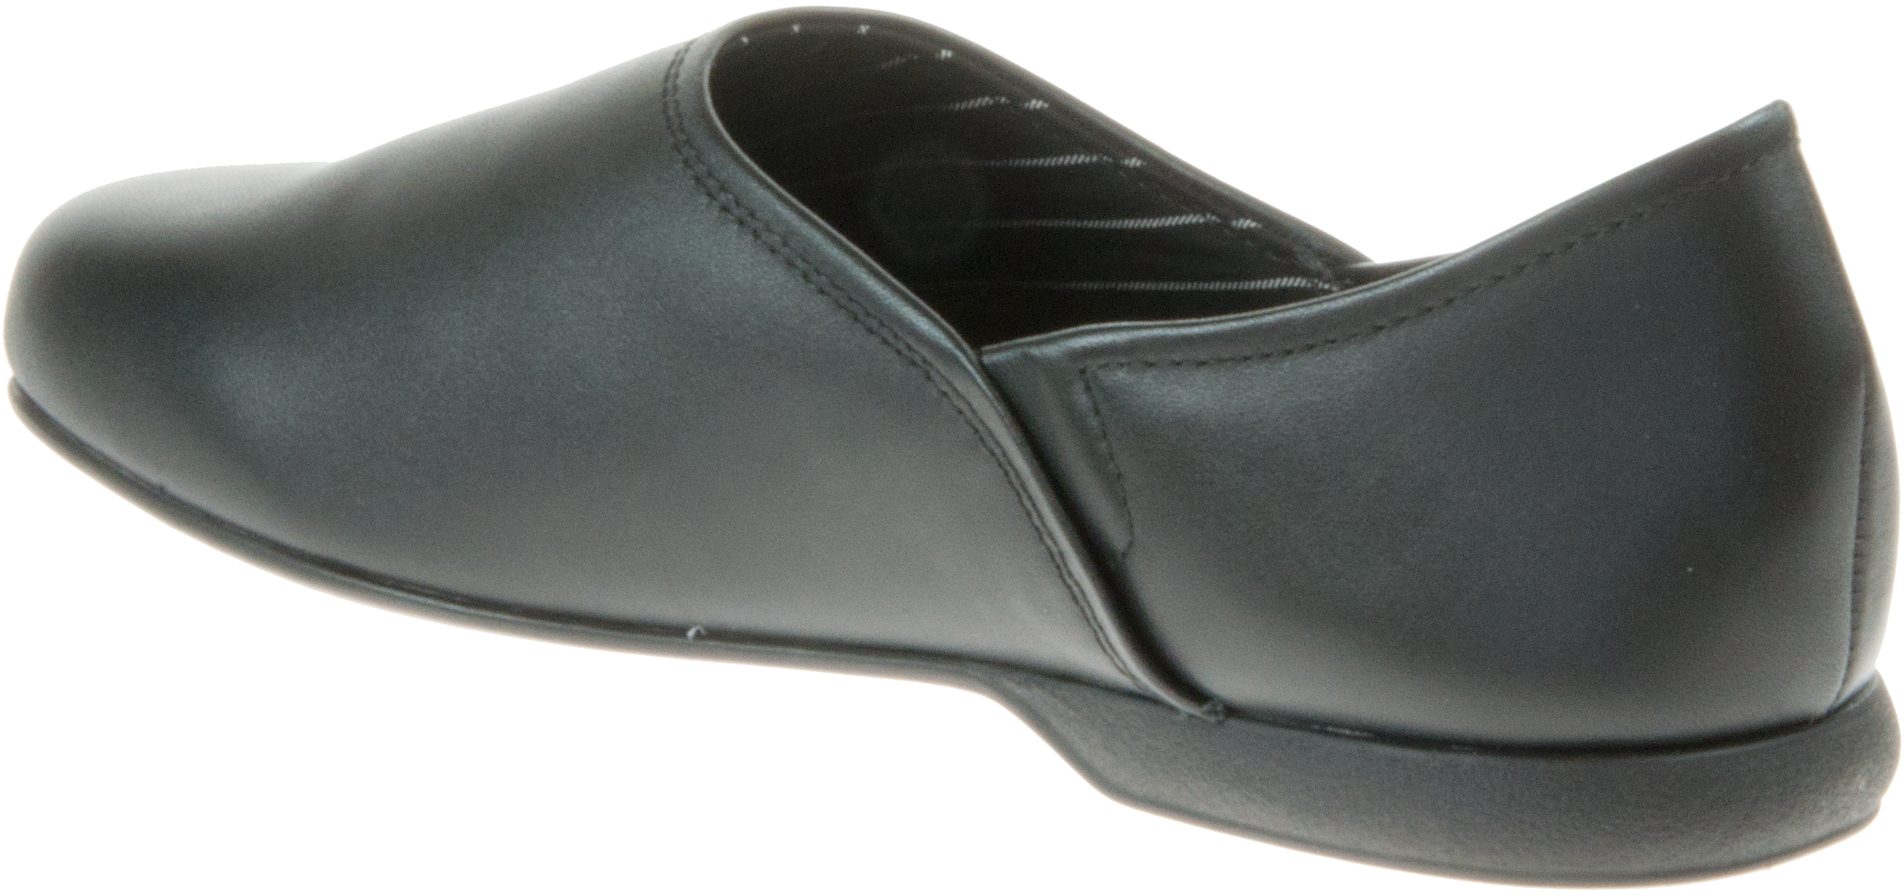 Clarks Harston Elite Black Leather 26144720 - Full Slippers - Humphries ...